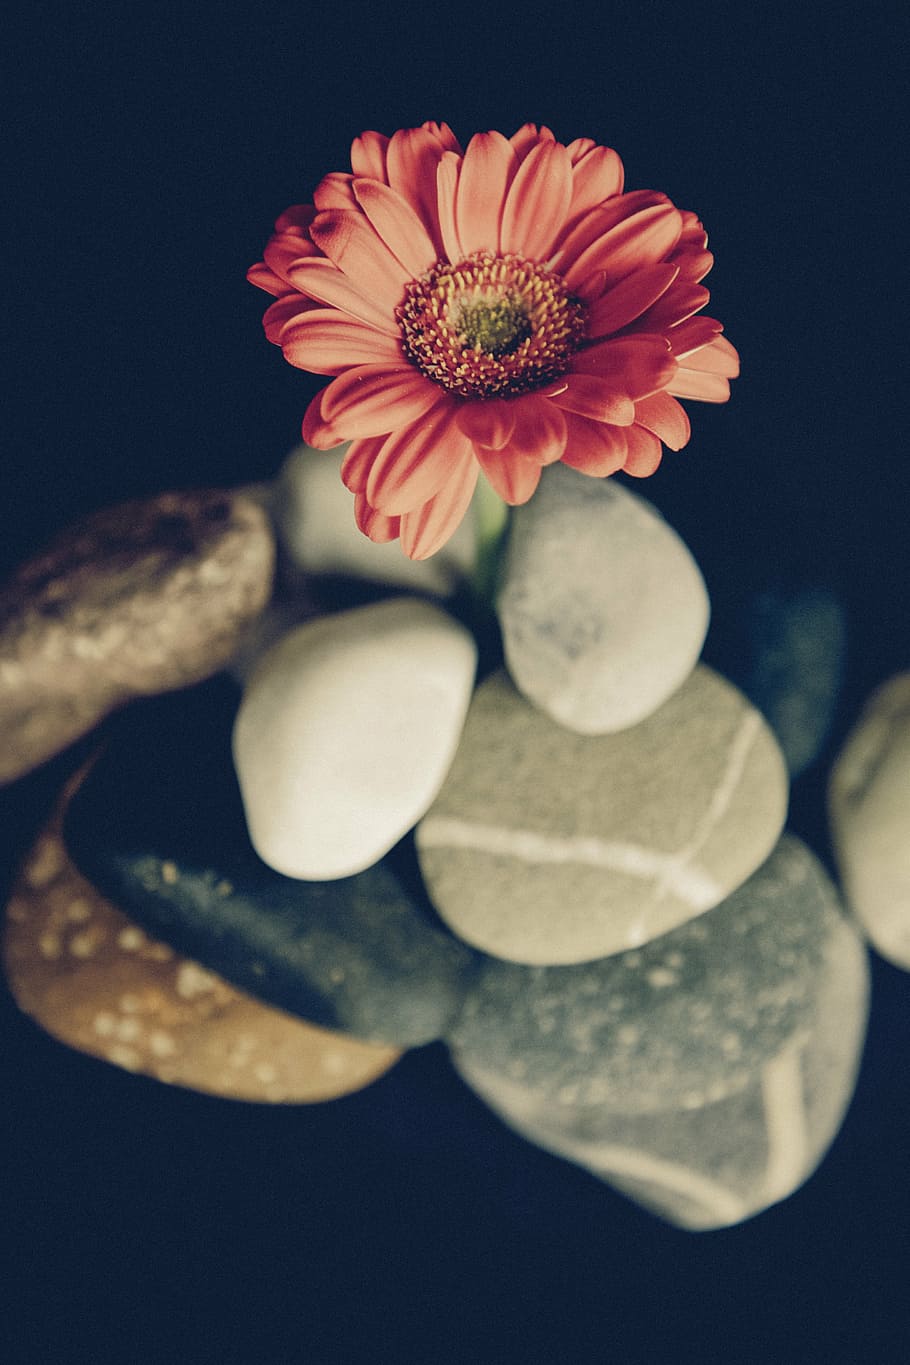 foto de close-up, rosa, flor da margarida do gerbera, amarelo, margarida, flor, pétala, pedra, rocha, escuro